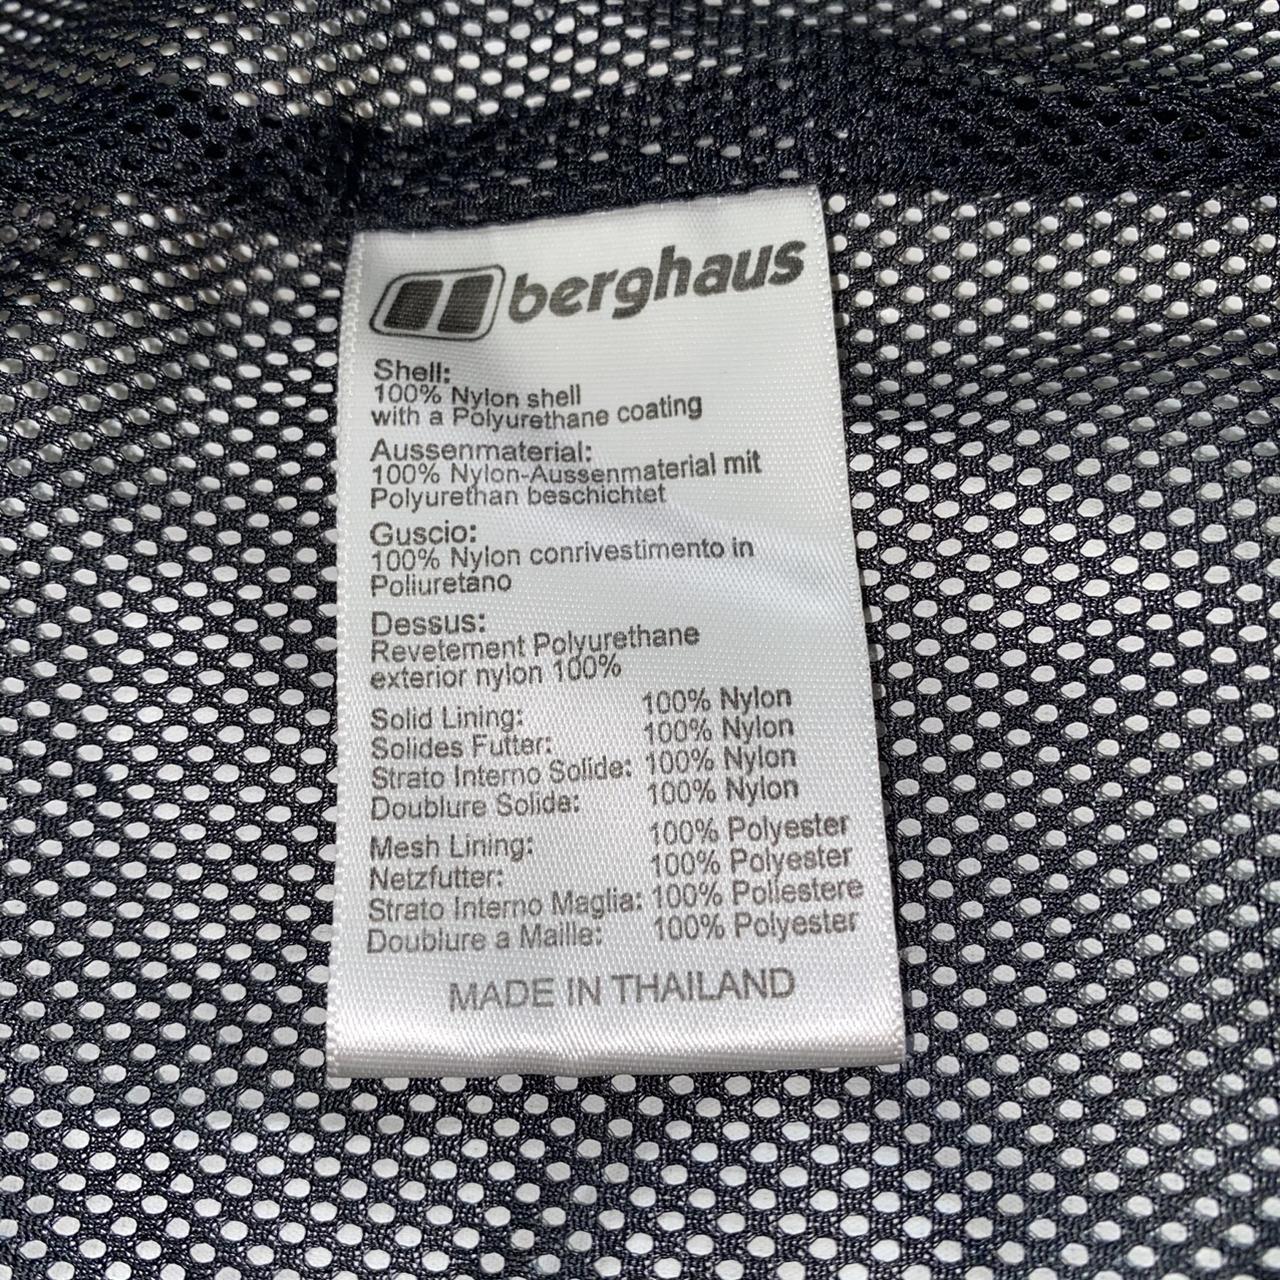 Product Image 3 - Berghaus Aqua Foil Jacket Size